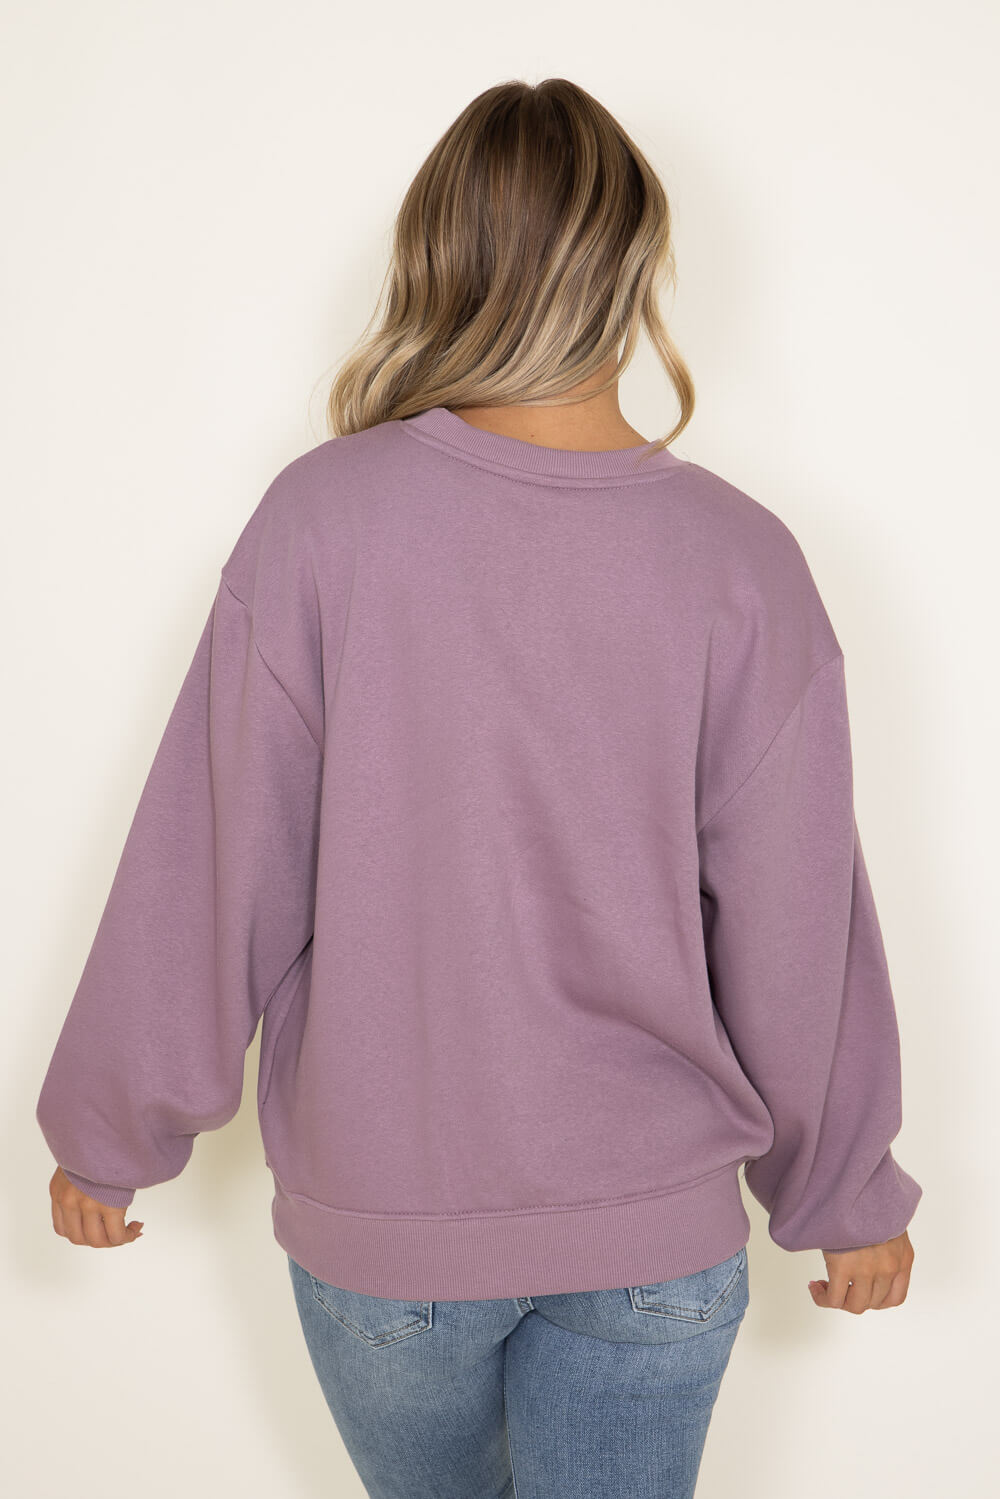 The North Face Evolution Oversized Crew Sweatshirt for Women in Mauve –  Glik's